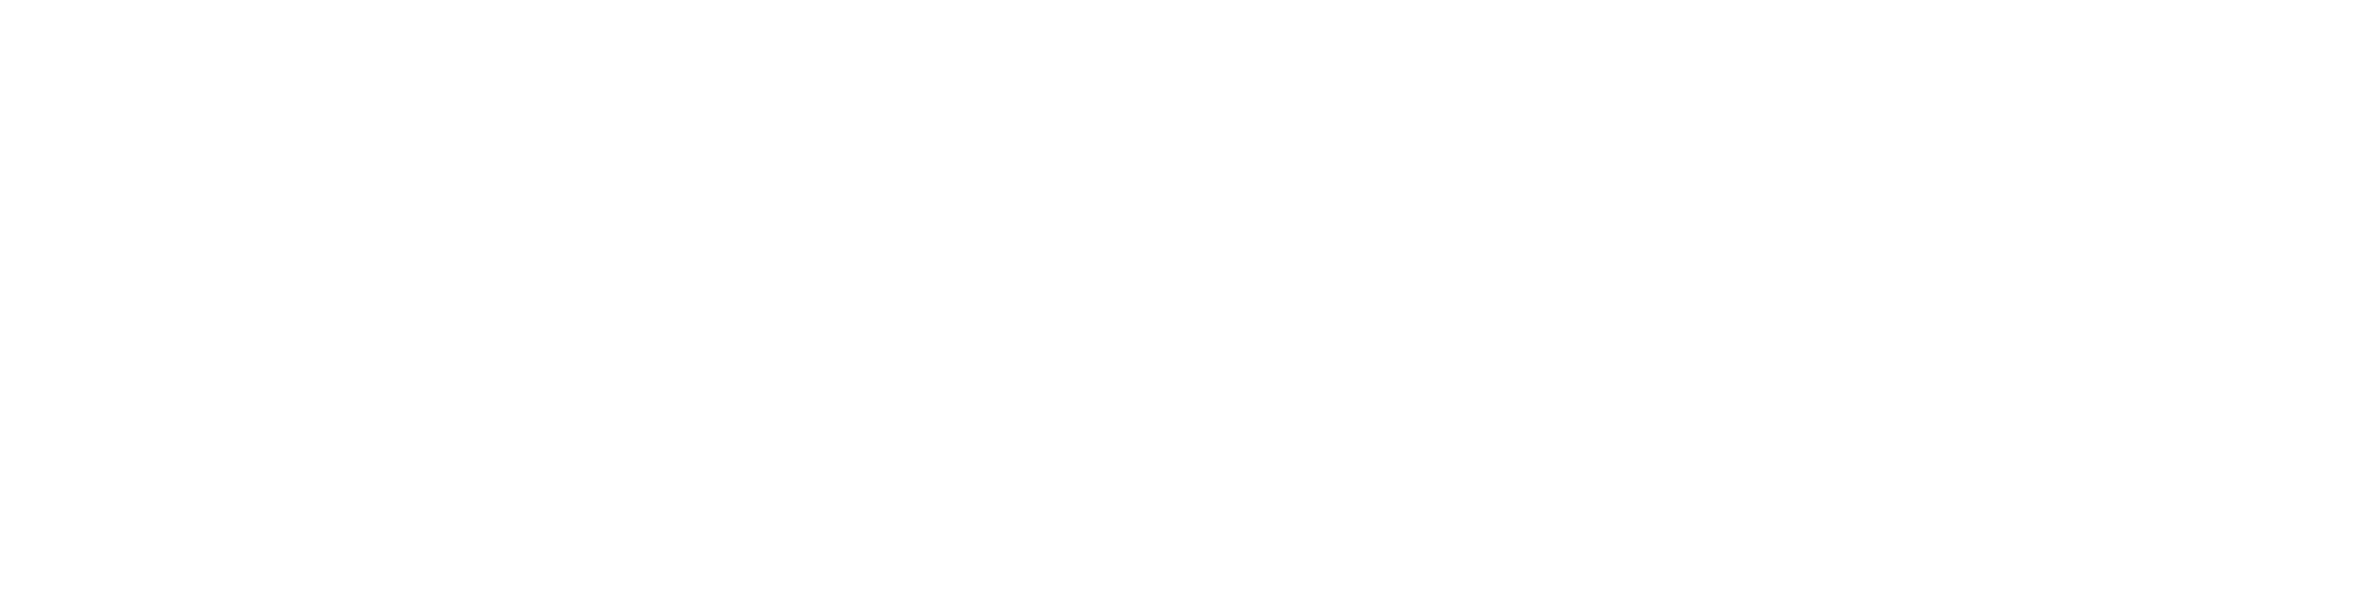 Image of CalChamber white logo